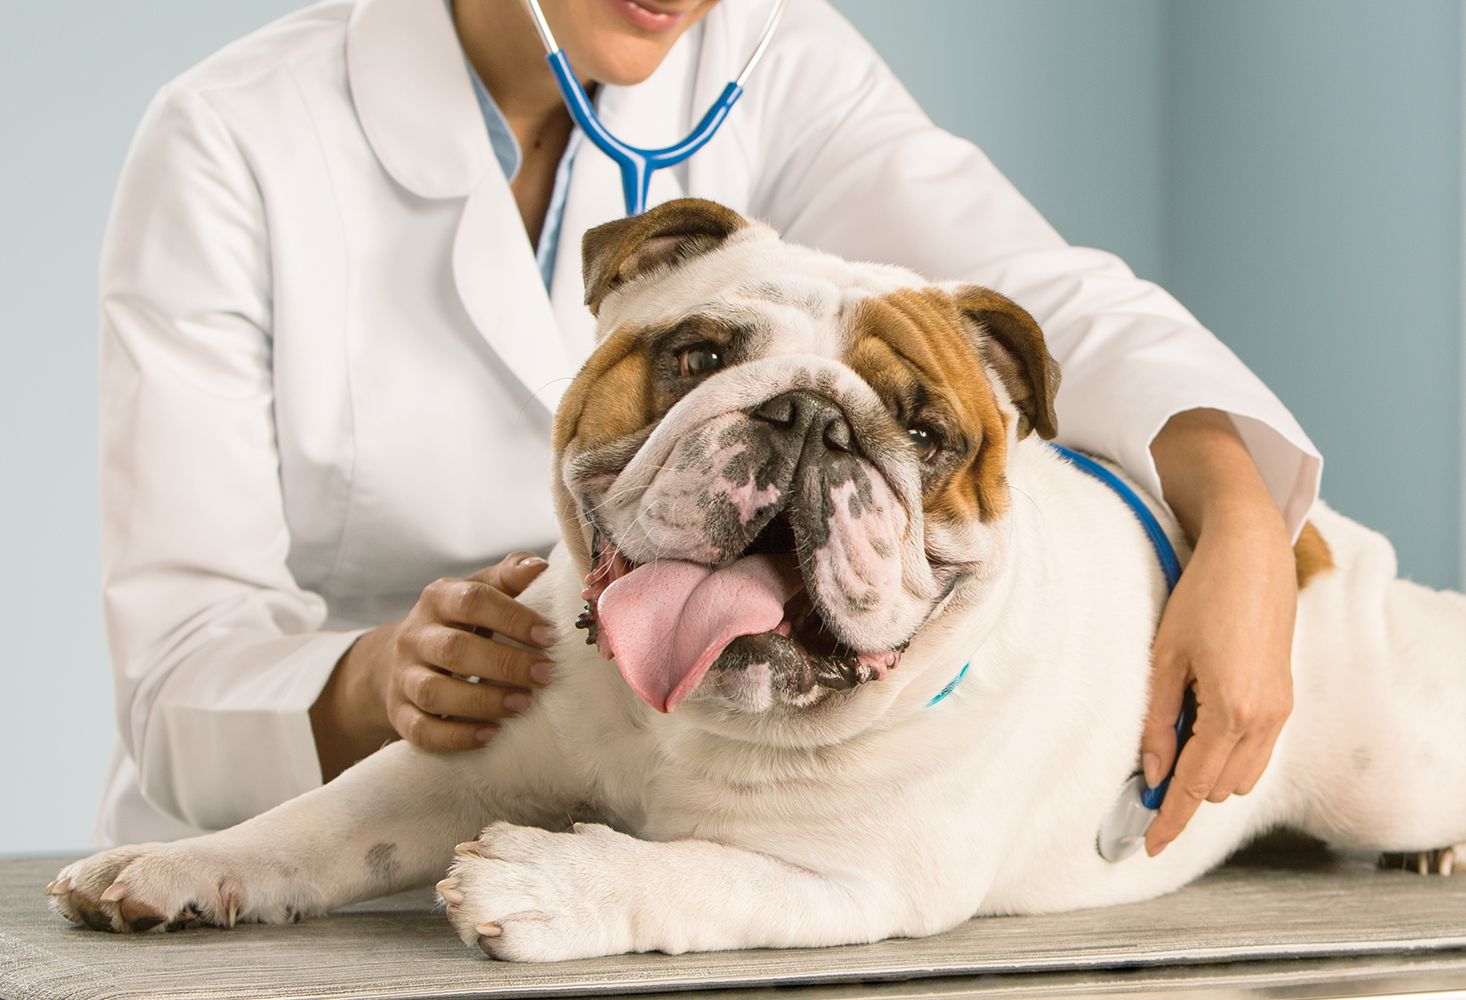 Banfield Pet Hospital: Veterinary Health Clinic | PetSmart